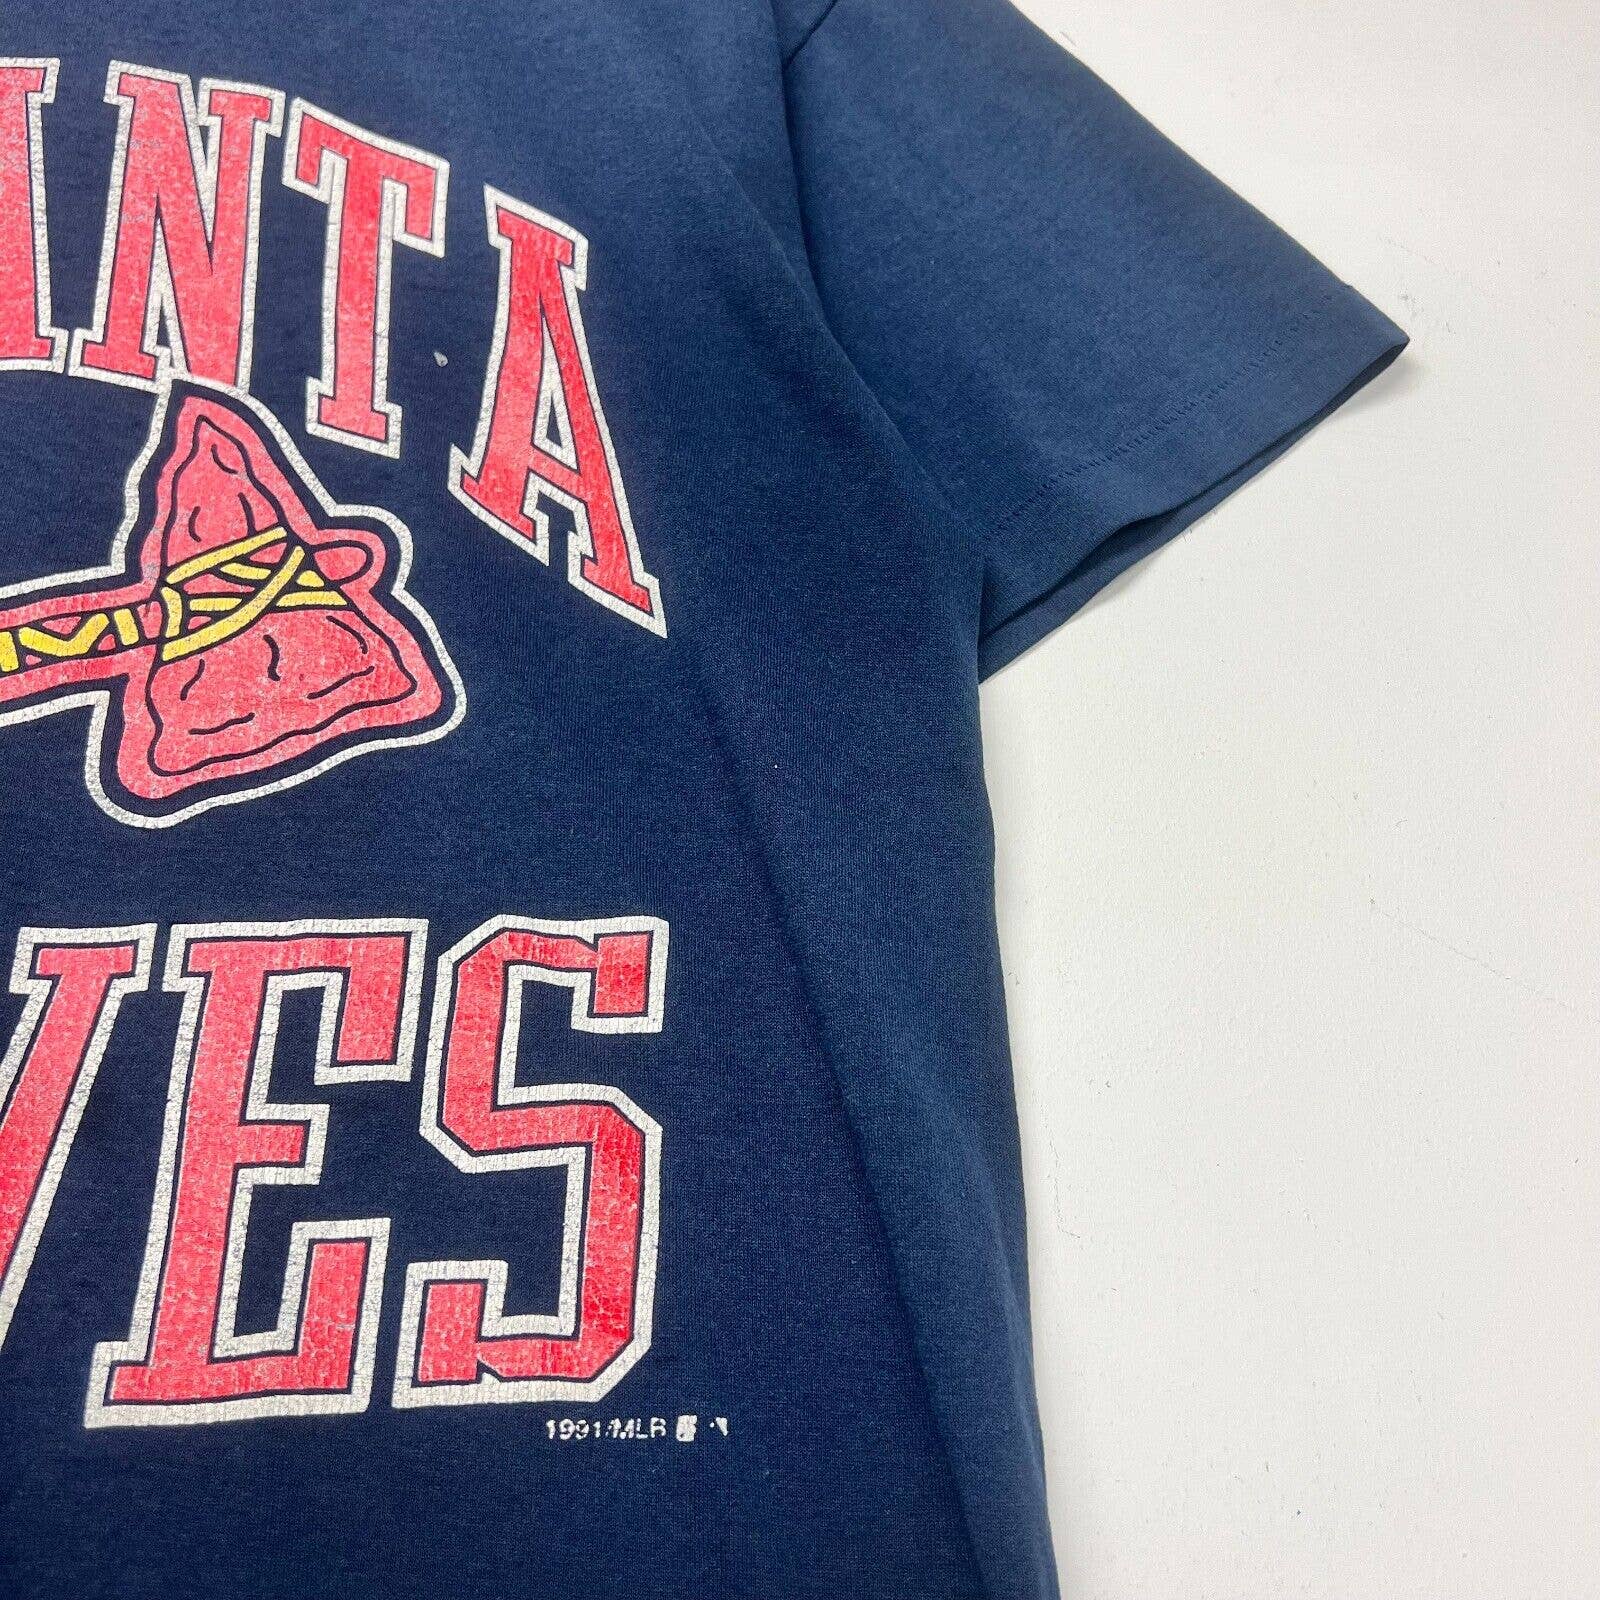 MLB Braves T-shirt Size L